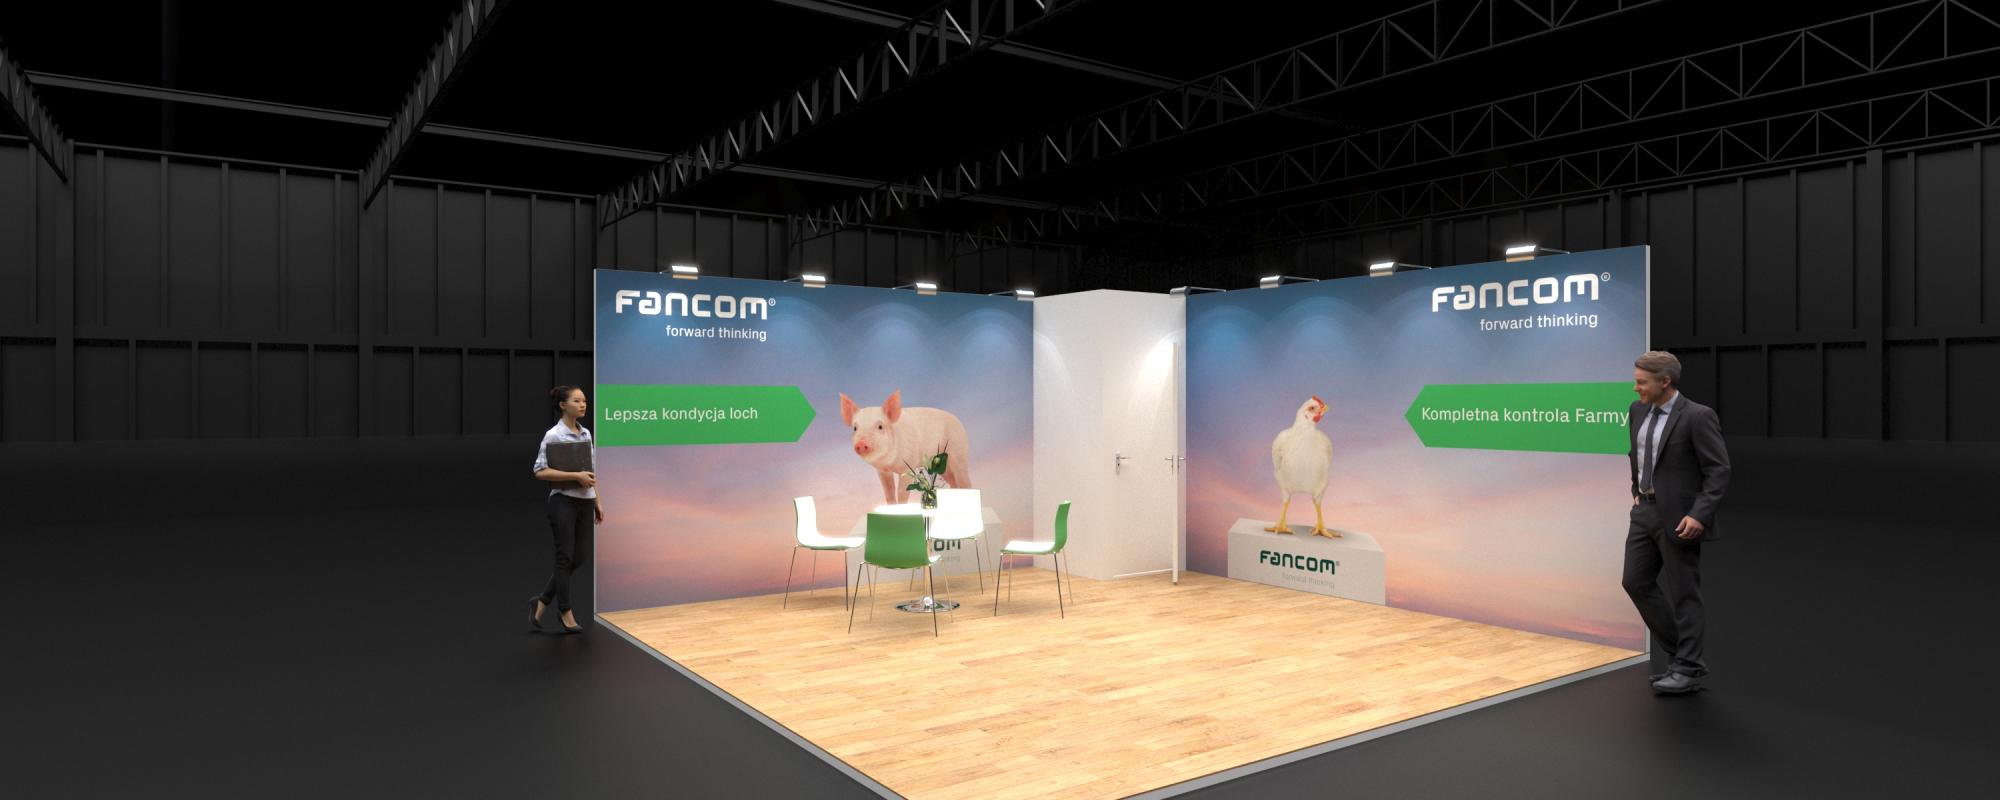 Fancom to attend Ferma in Poland